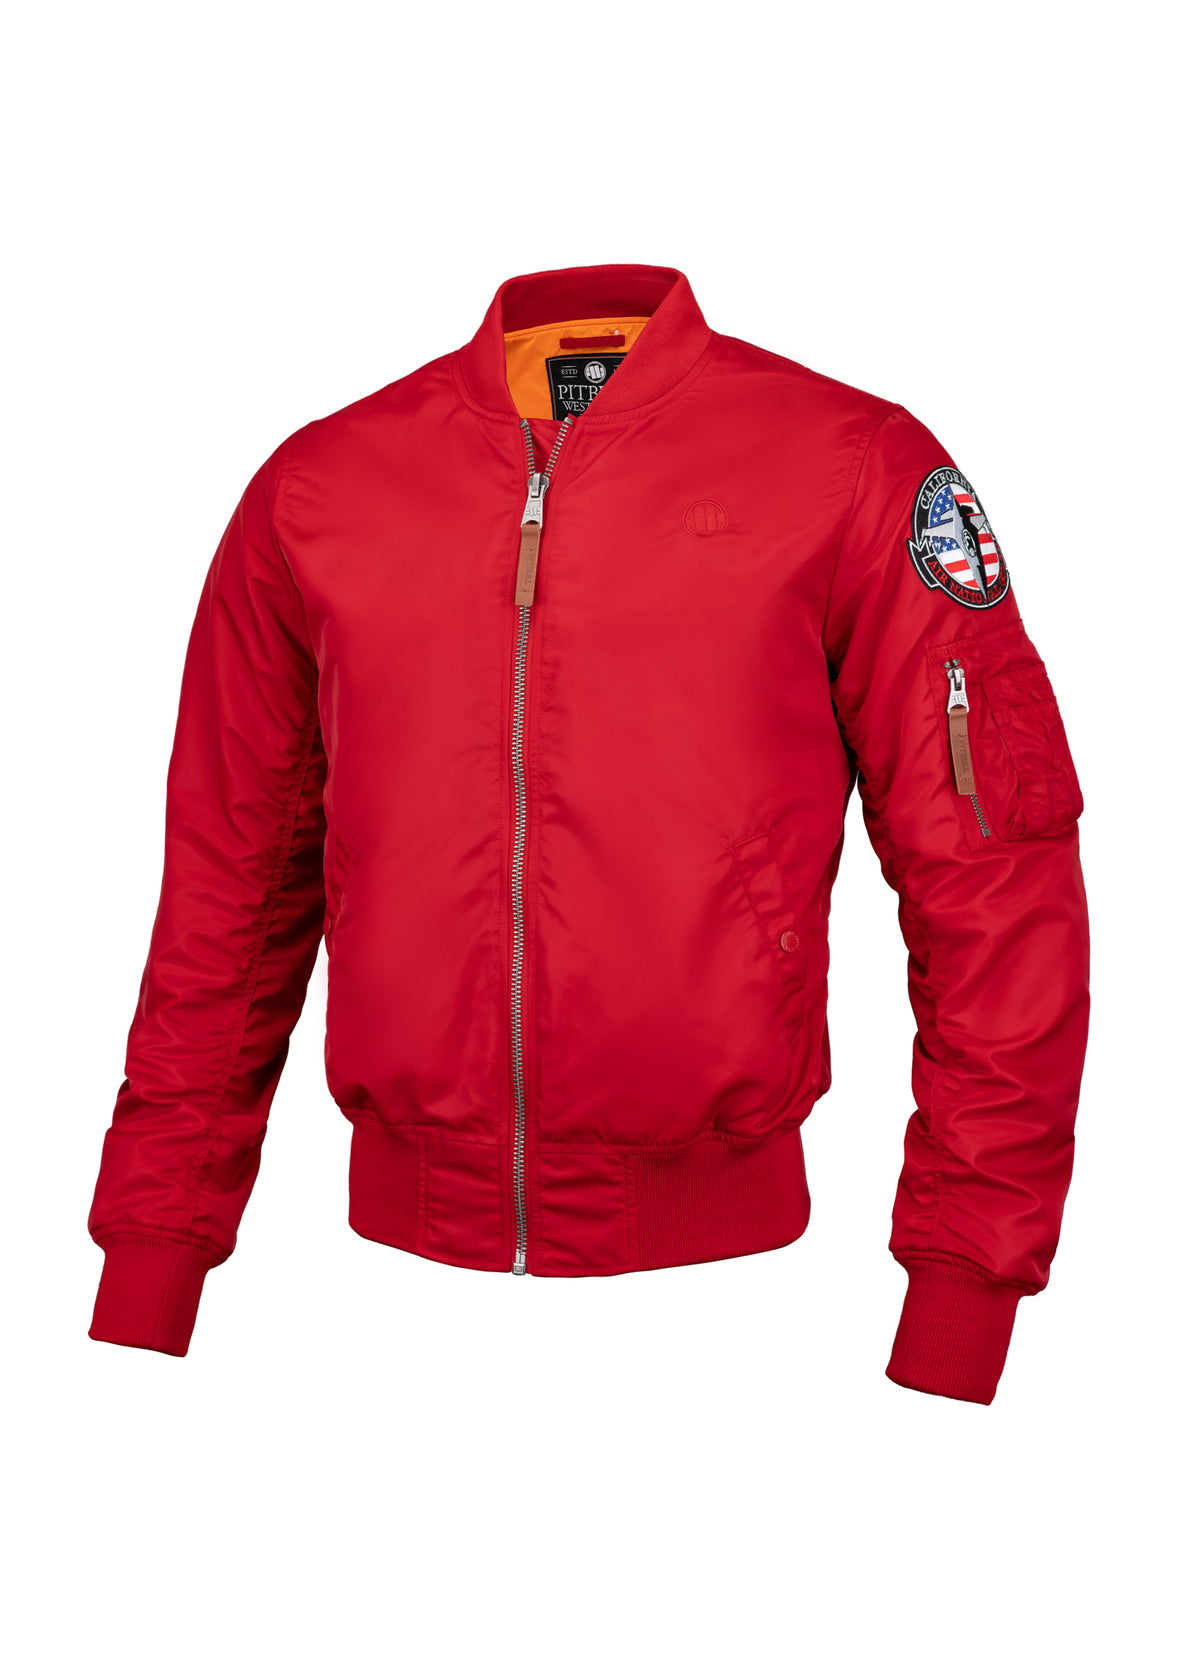 MA-1 Flight Jacket Red - Pitbull West Coast International Store 